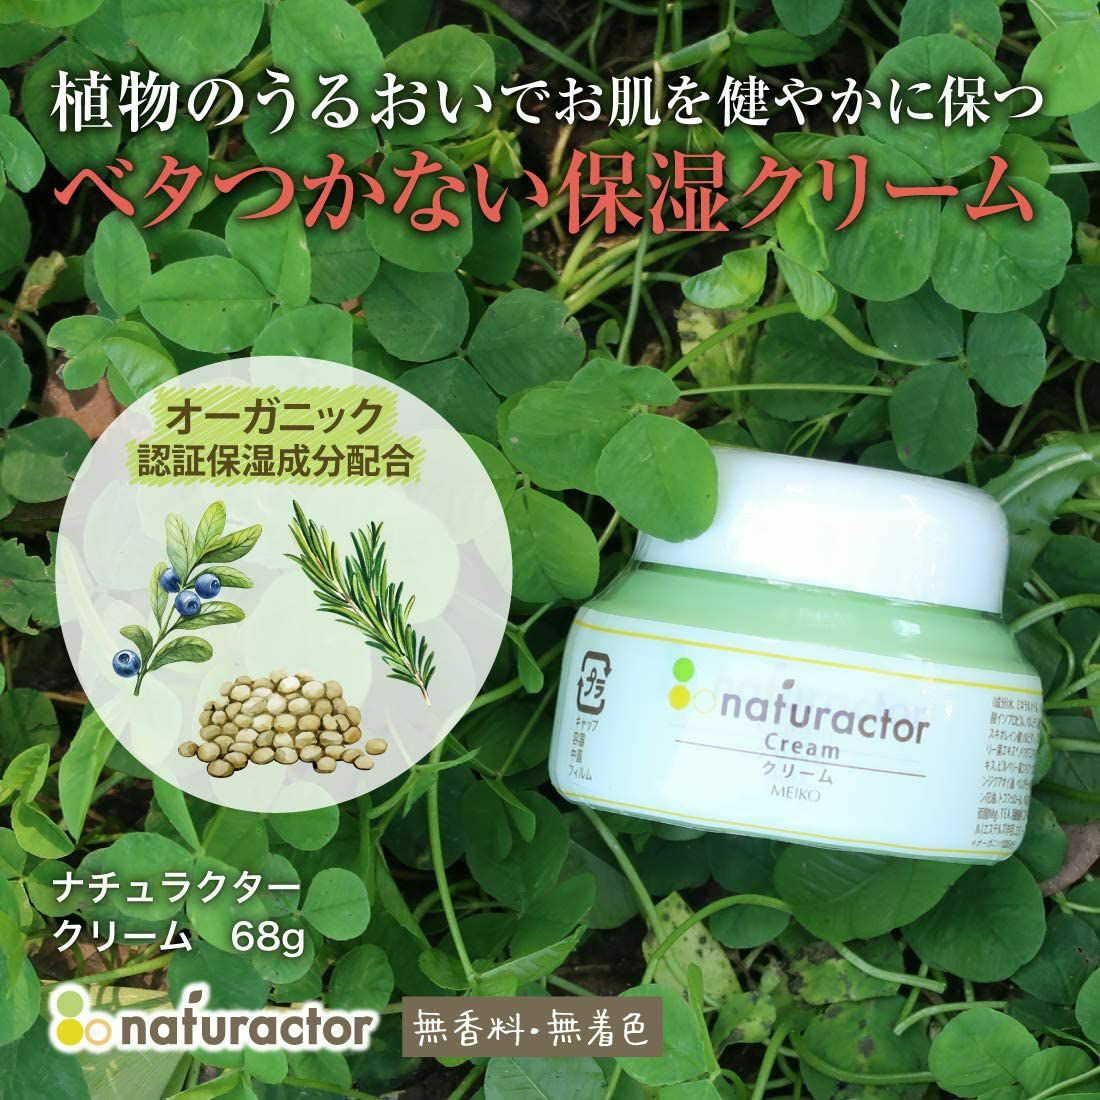 Naturactor Cream